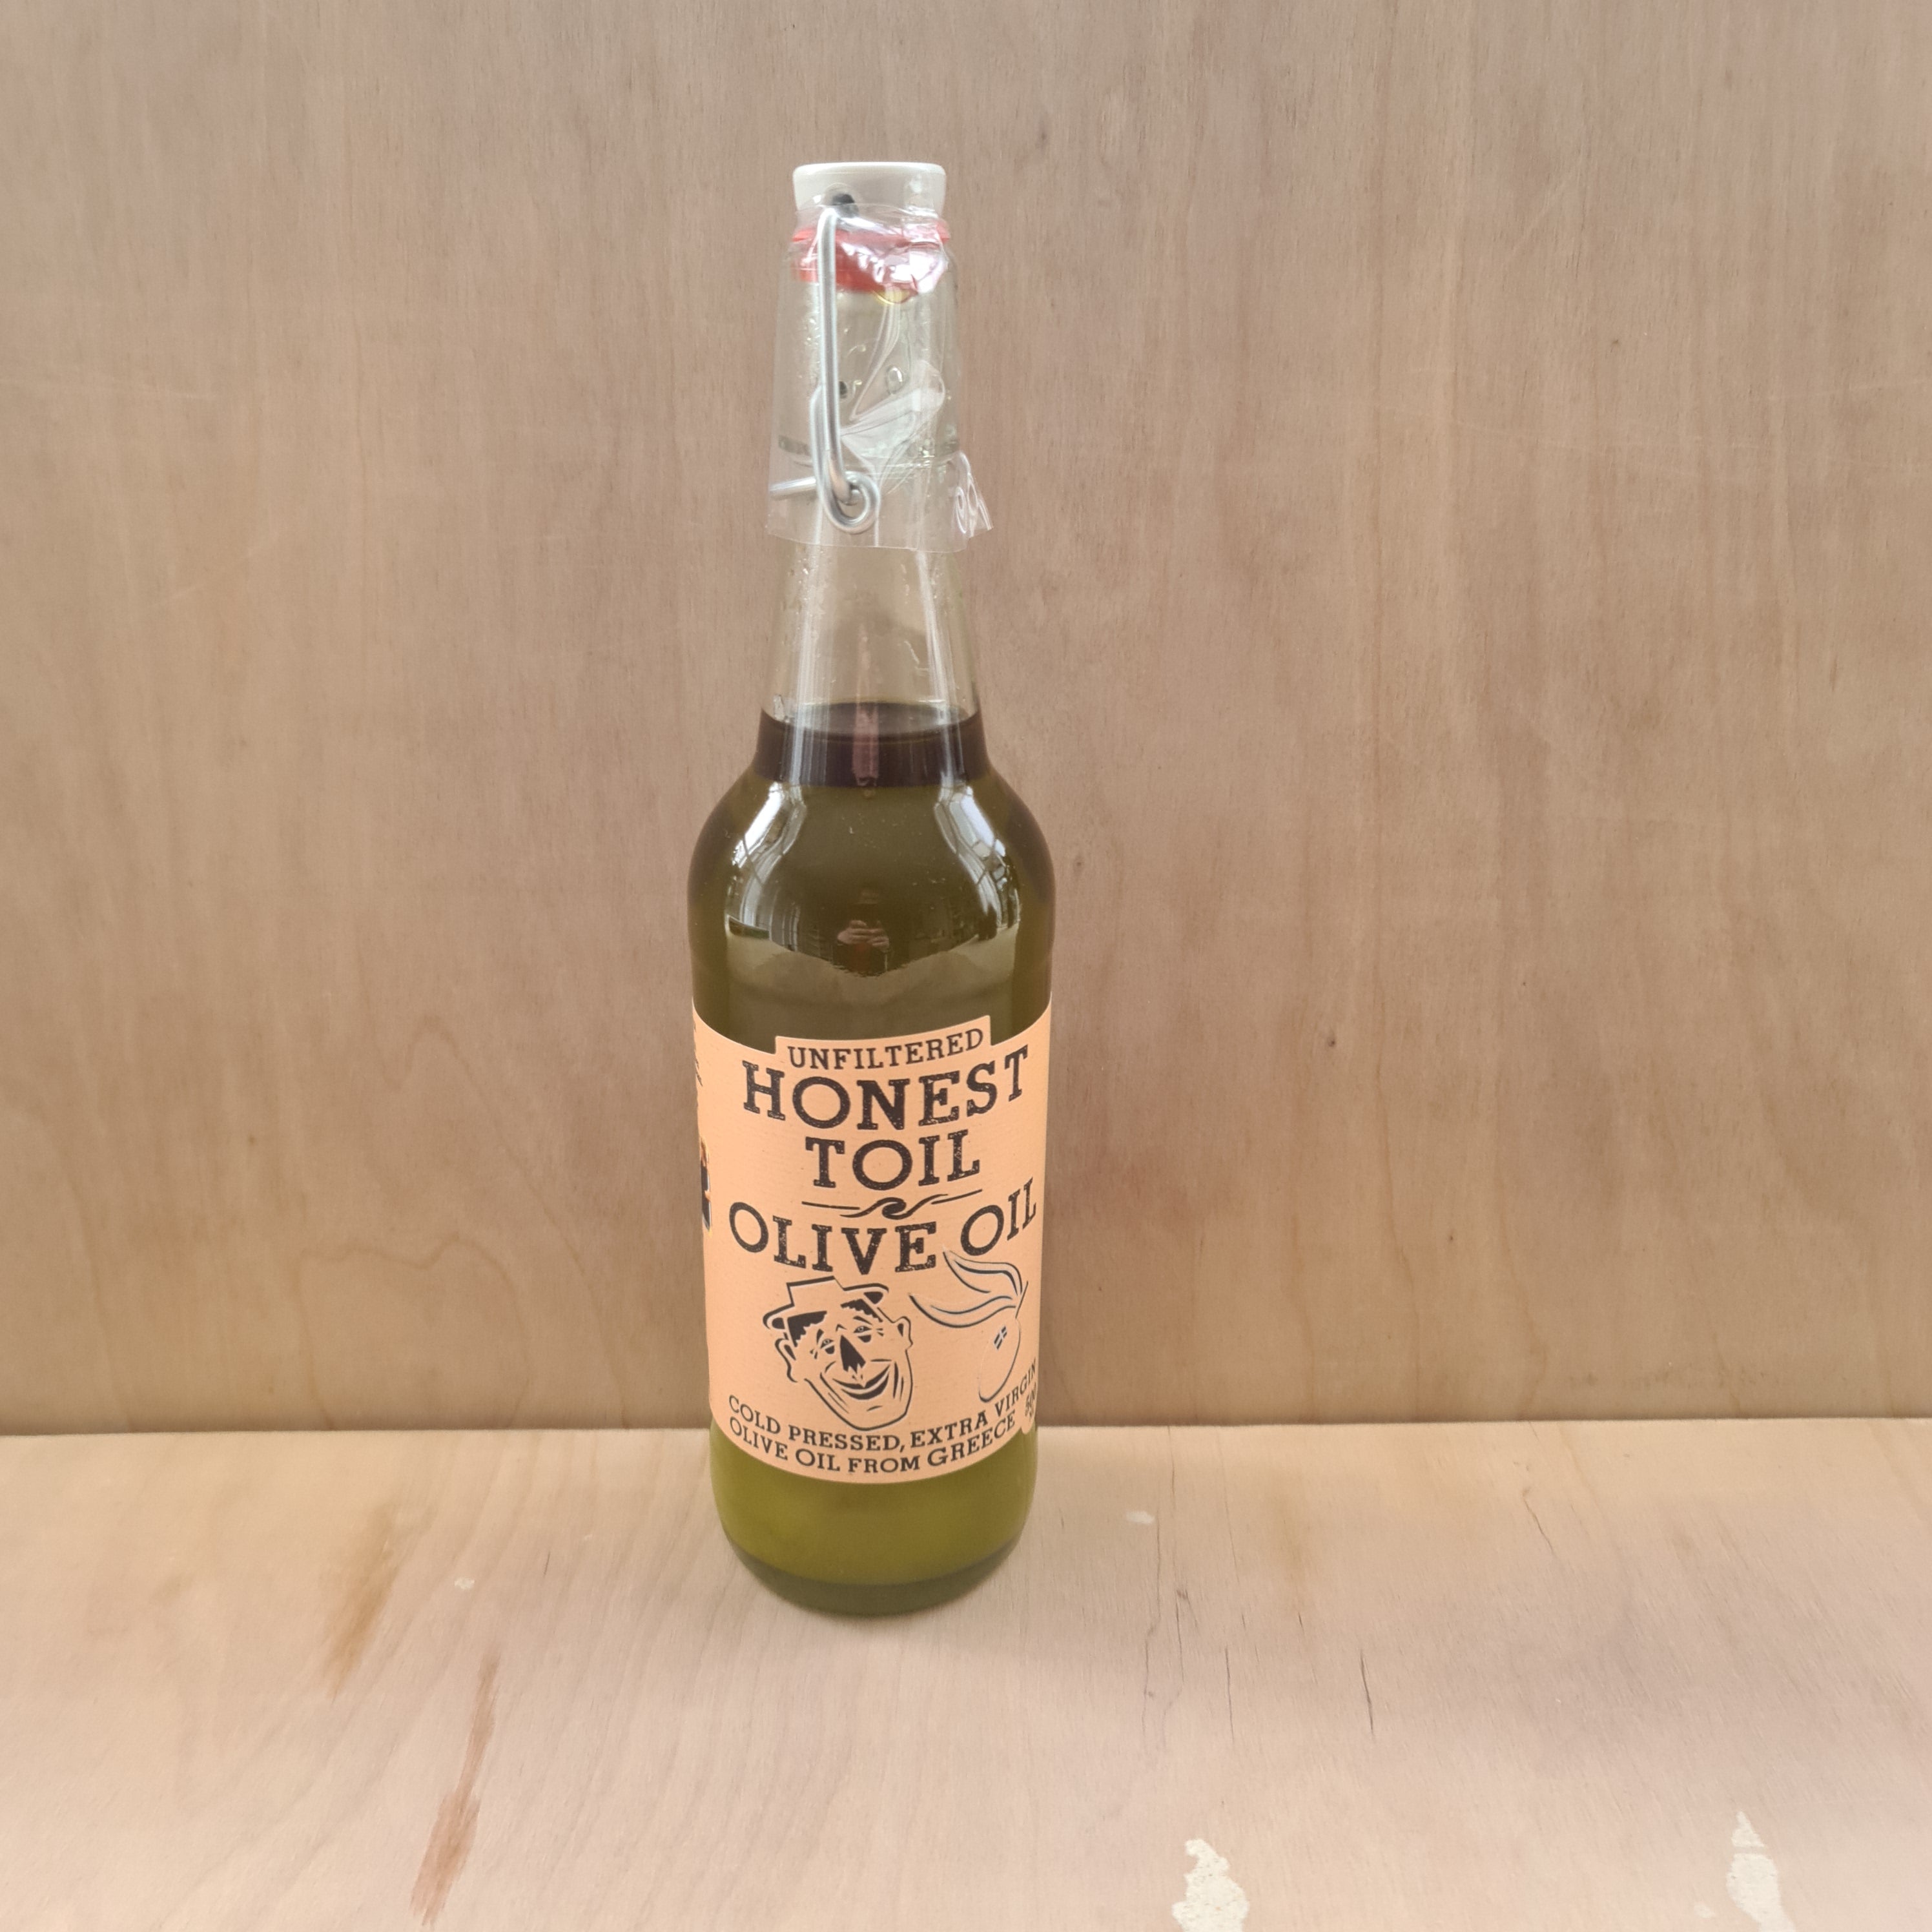 Honest Toil Olive Oil 500ml - IFFLEY ROAD